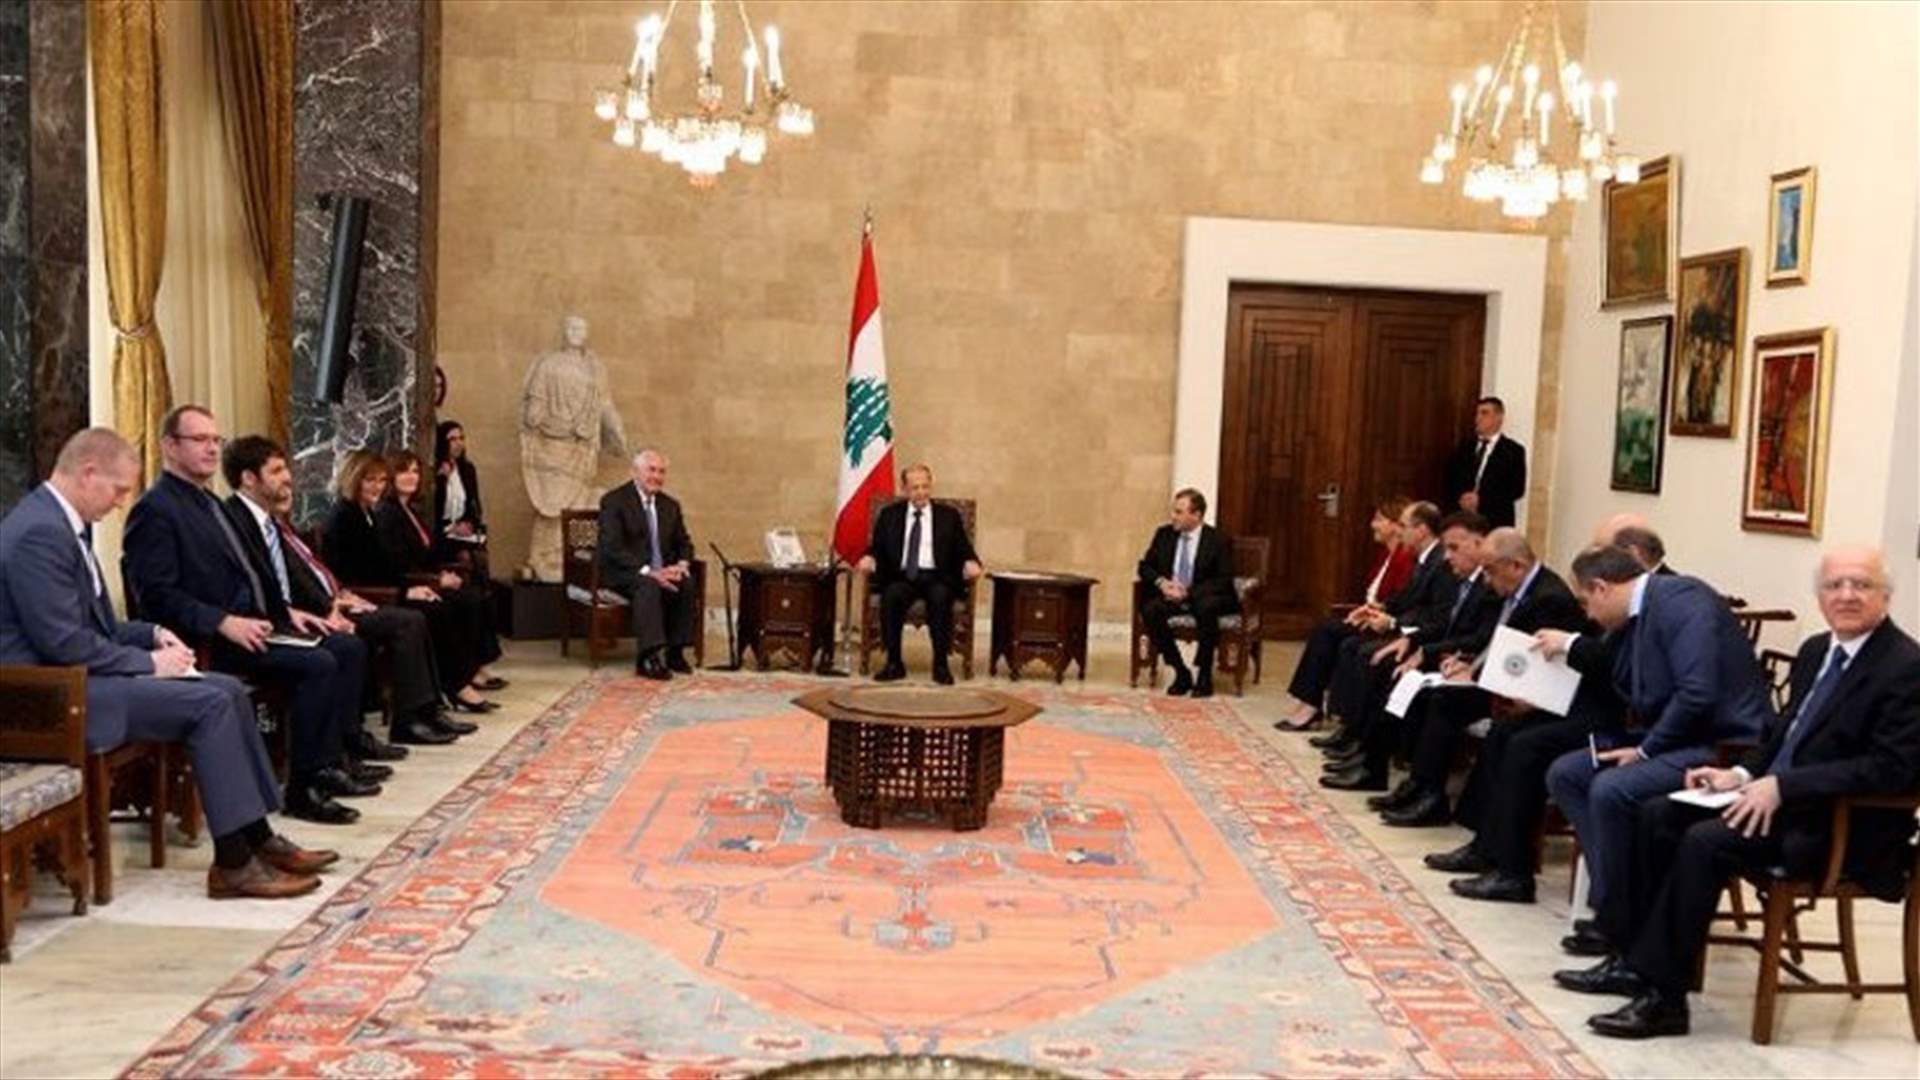 Tillerson kicks off talks in Lebanon from Baabda palace